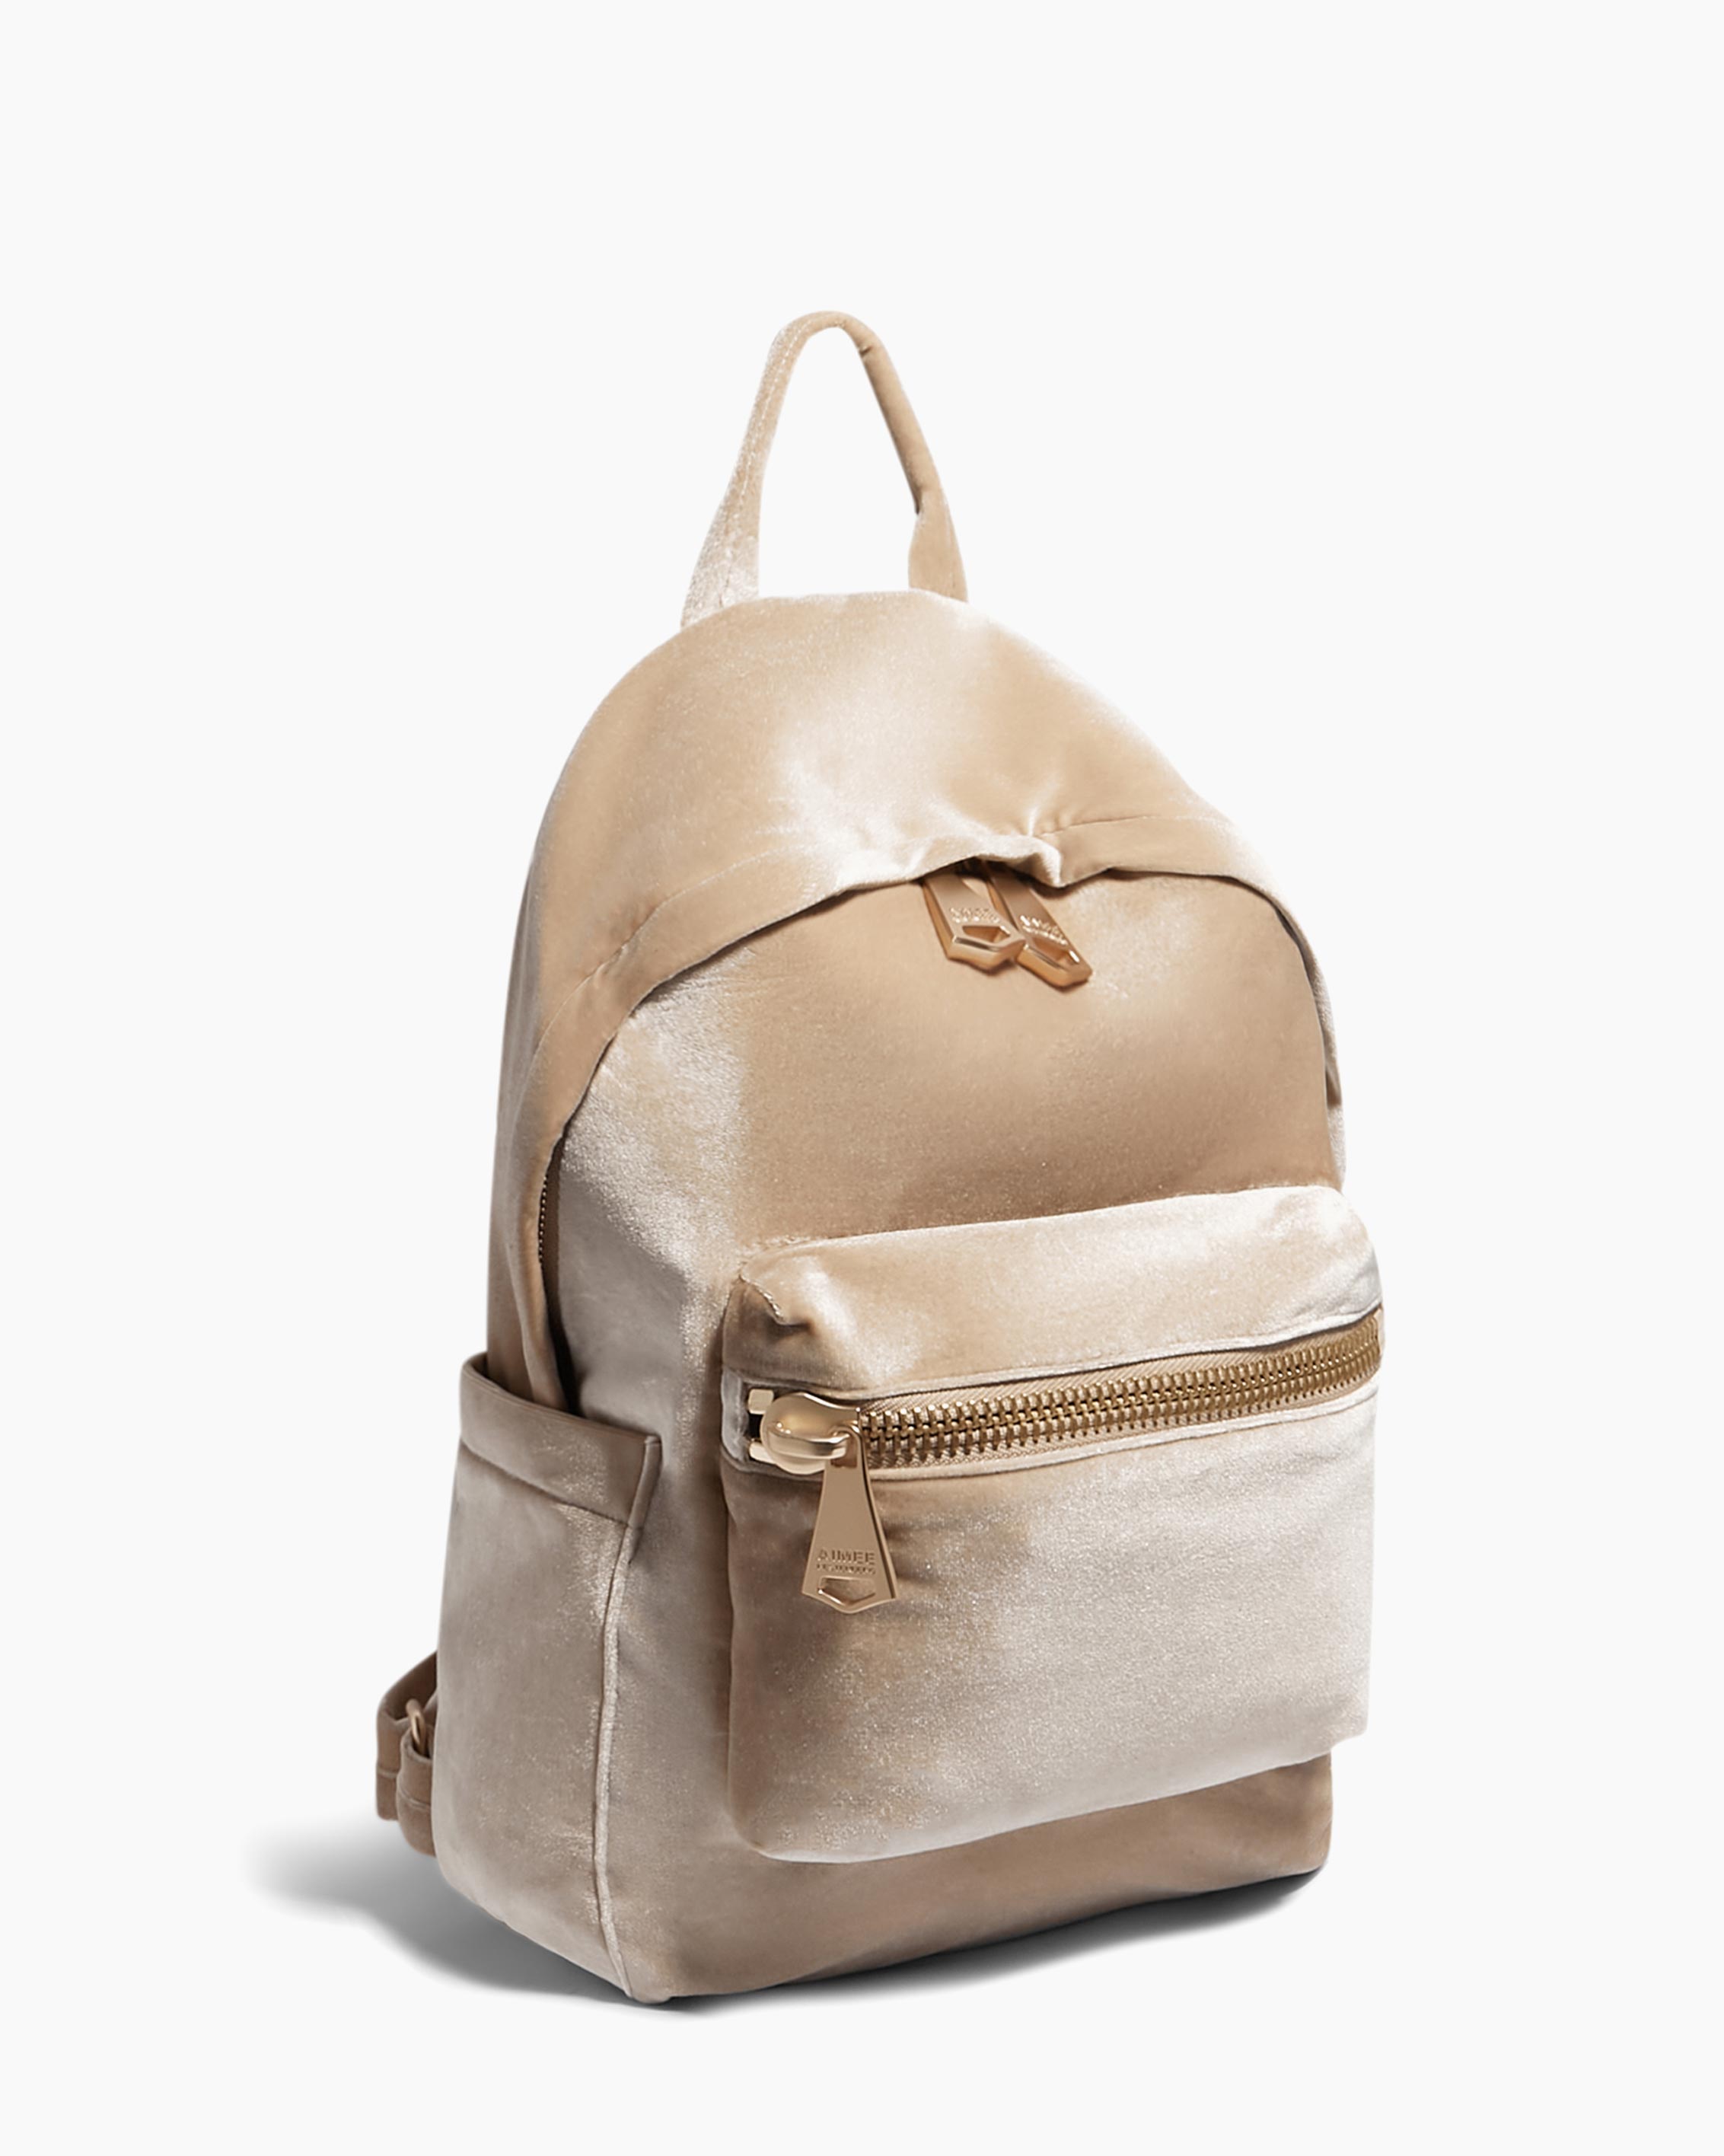 Buy Bohemian Backpack – Boho Backpack Purse - Large Baja Backpack Hippie  Backpack for Women Men Rasta at Amazon.in